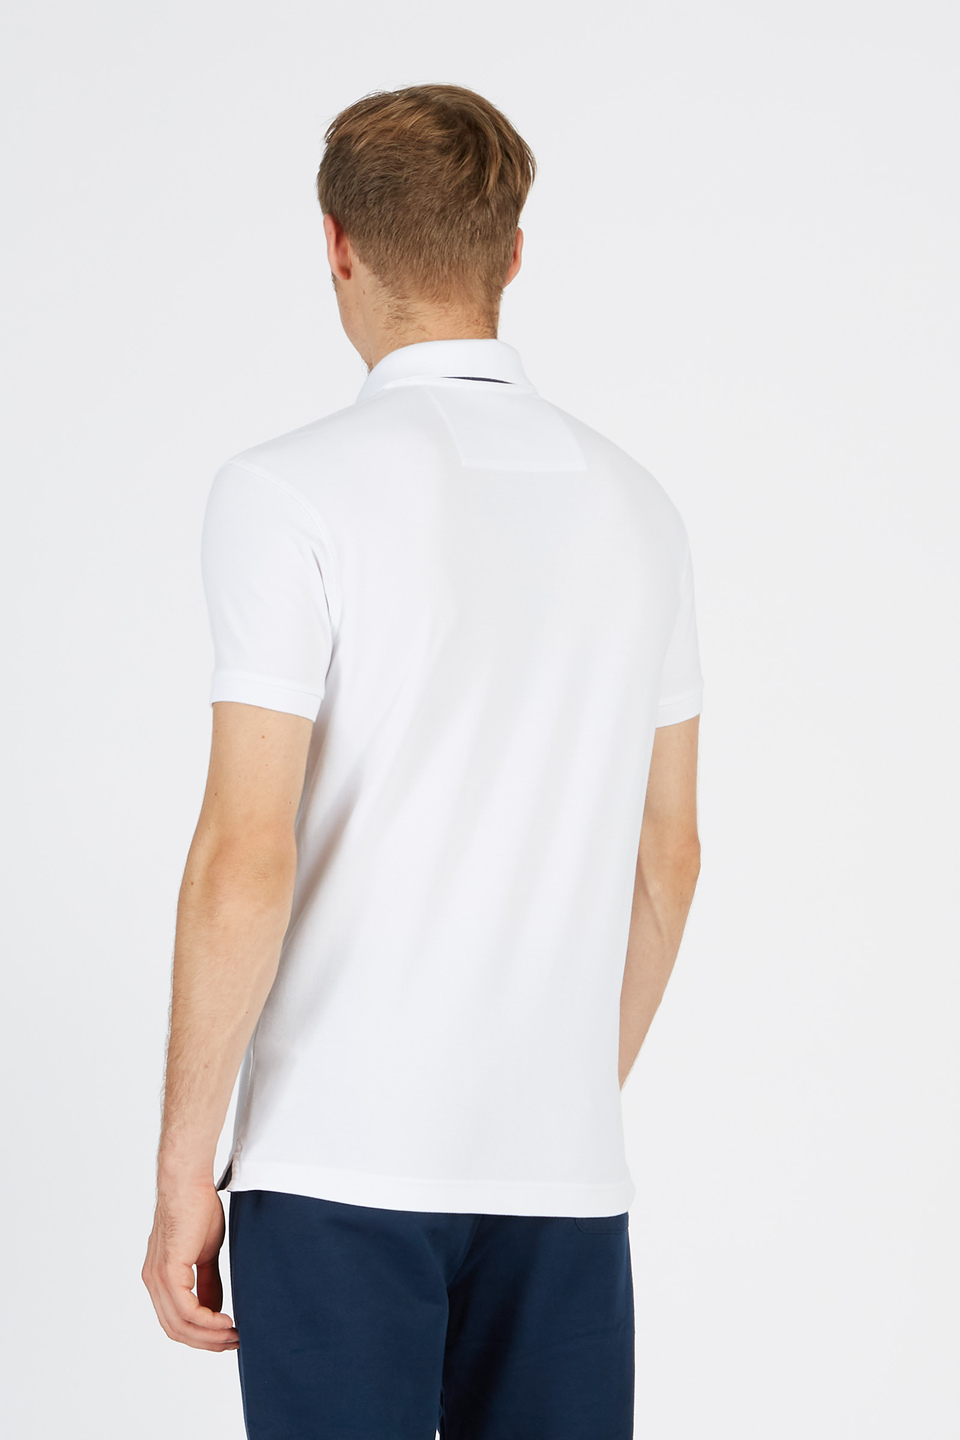 Herren-Poloshirt slim fit - La Martina - Official Online Shop